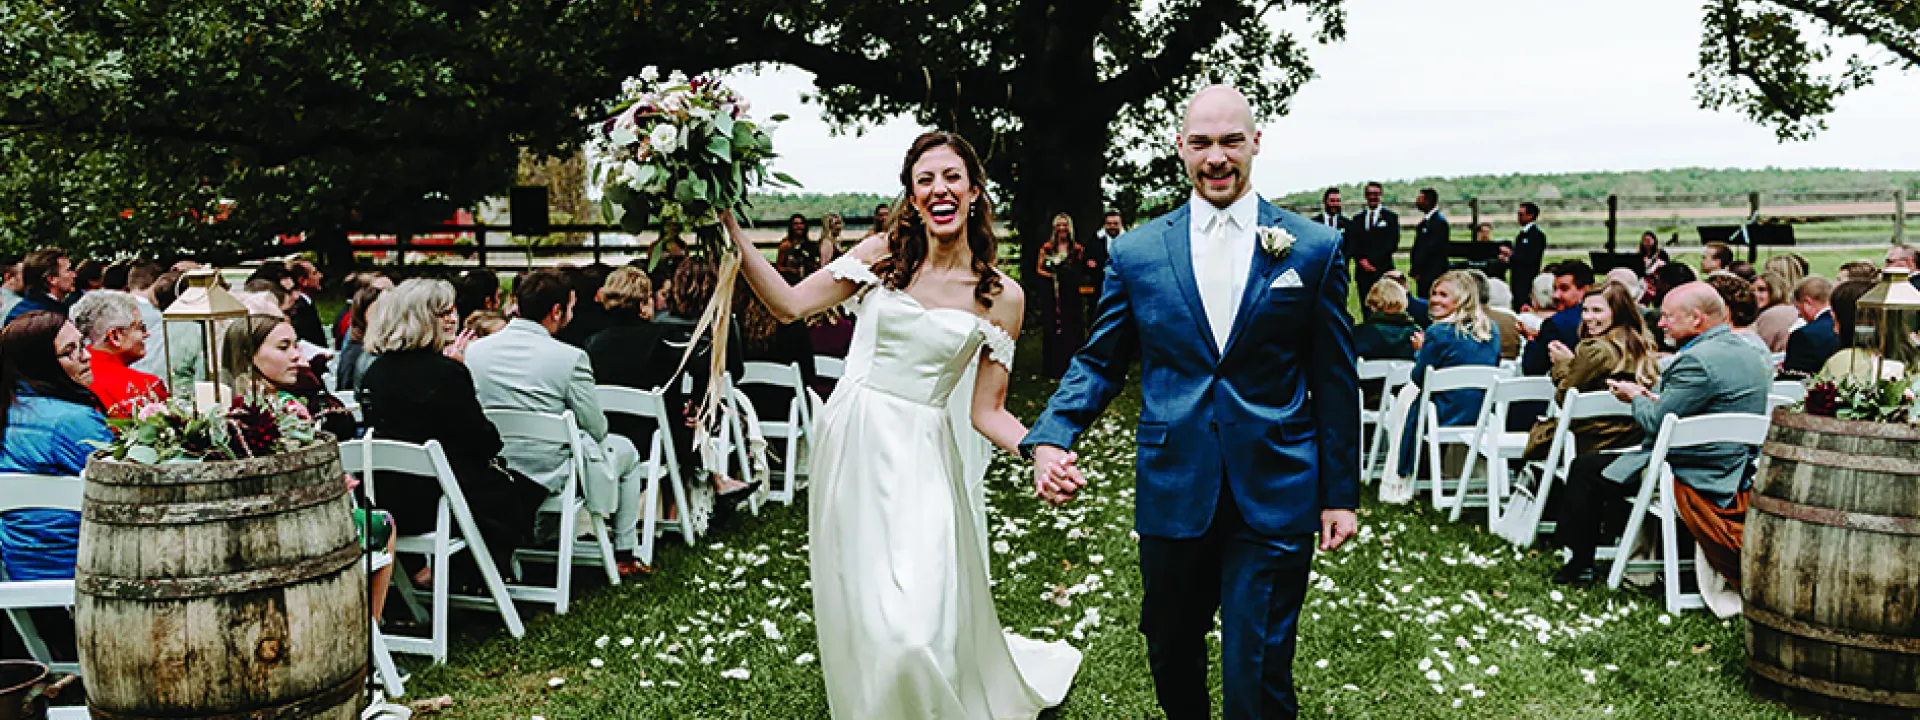 Caroline Grassl and Miles Groeschel walk down the aisle at their Sugarland Barn wedding.